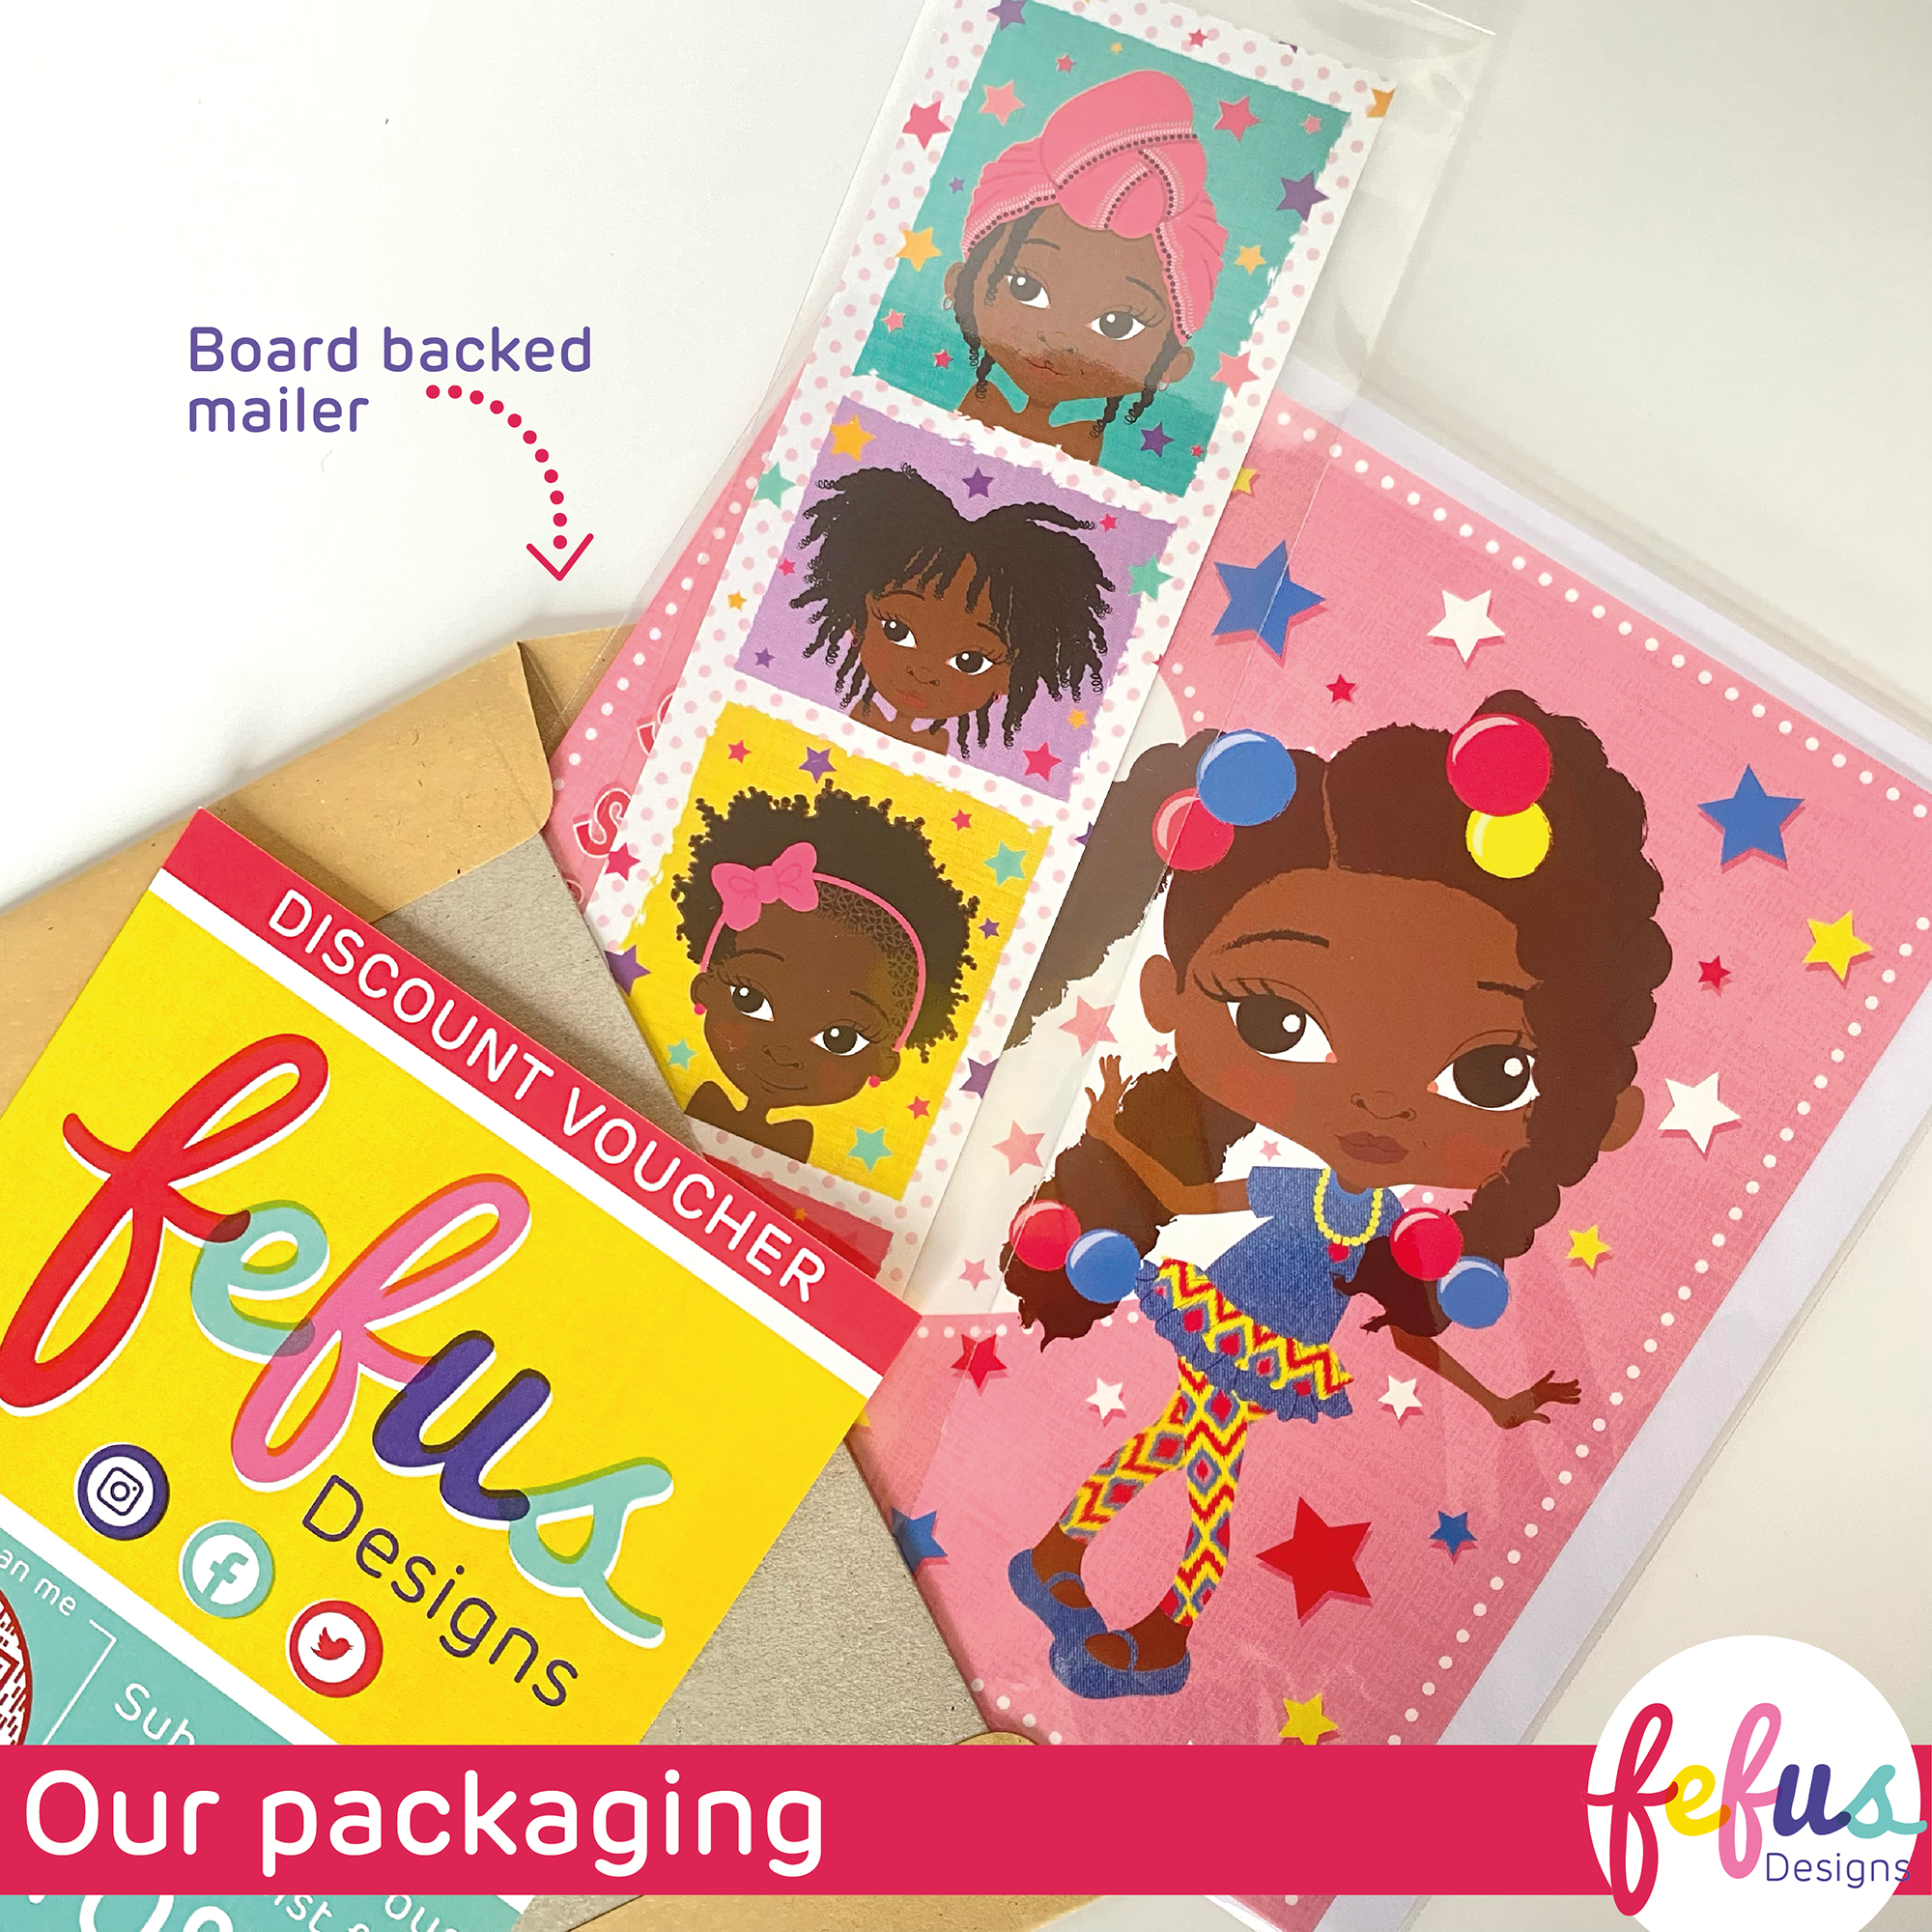 First Birthday - Afro Puff Black Girls Birthday Card | Fefus designs